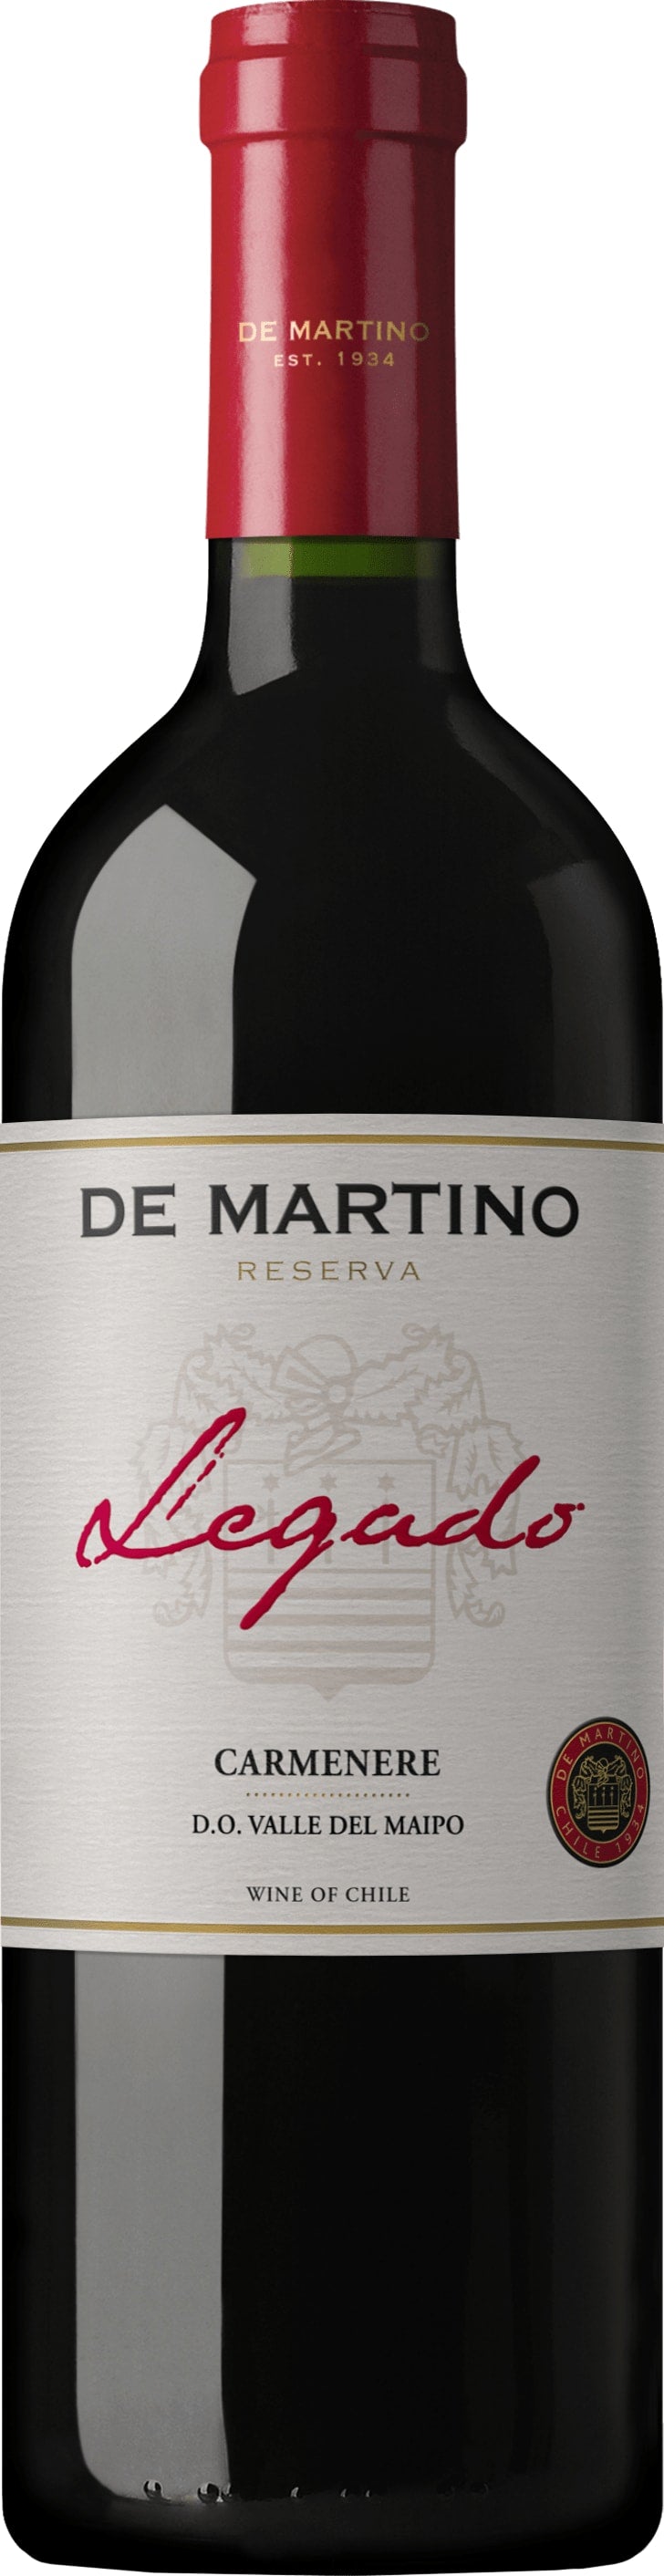 De Martino Legado Carmenere 2022 75cl - Buy De Martino Wines from GREAT WINES DIRECT wine shop